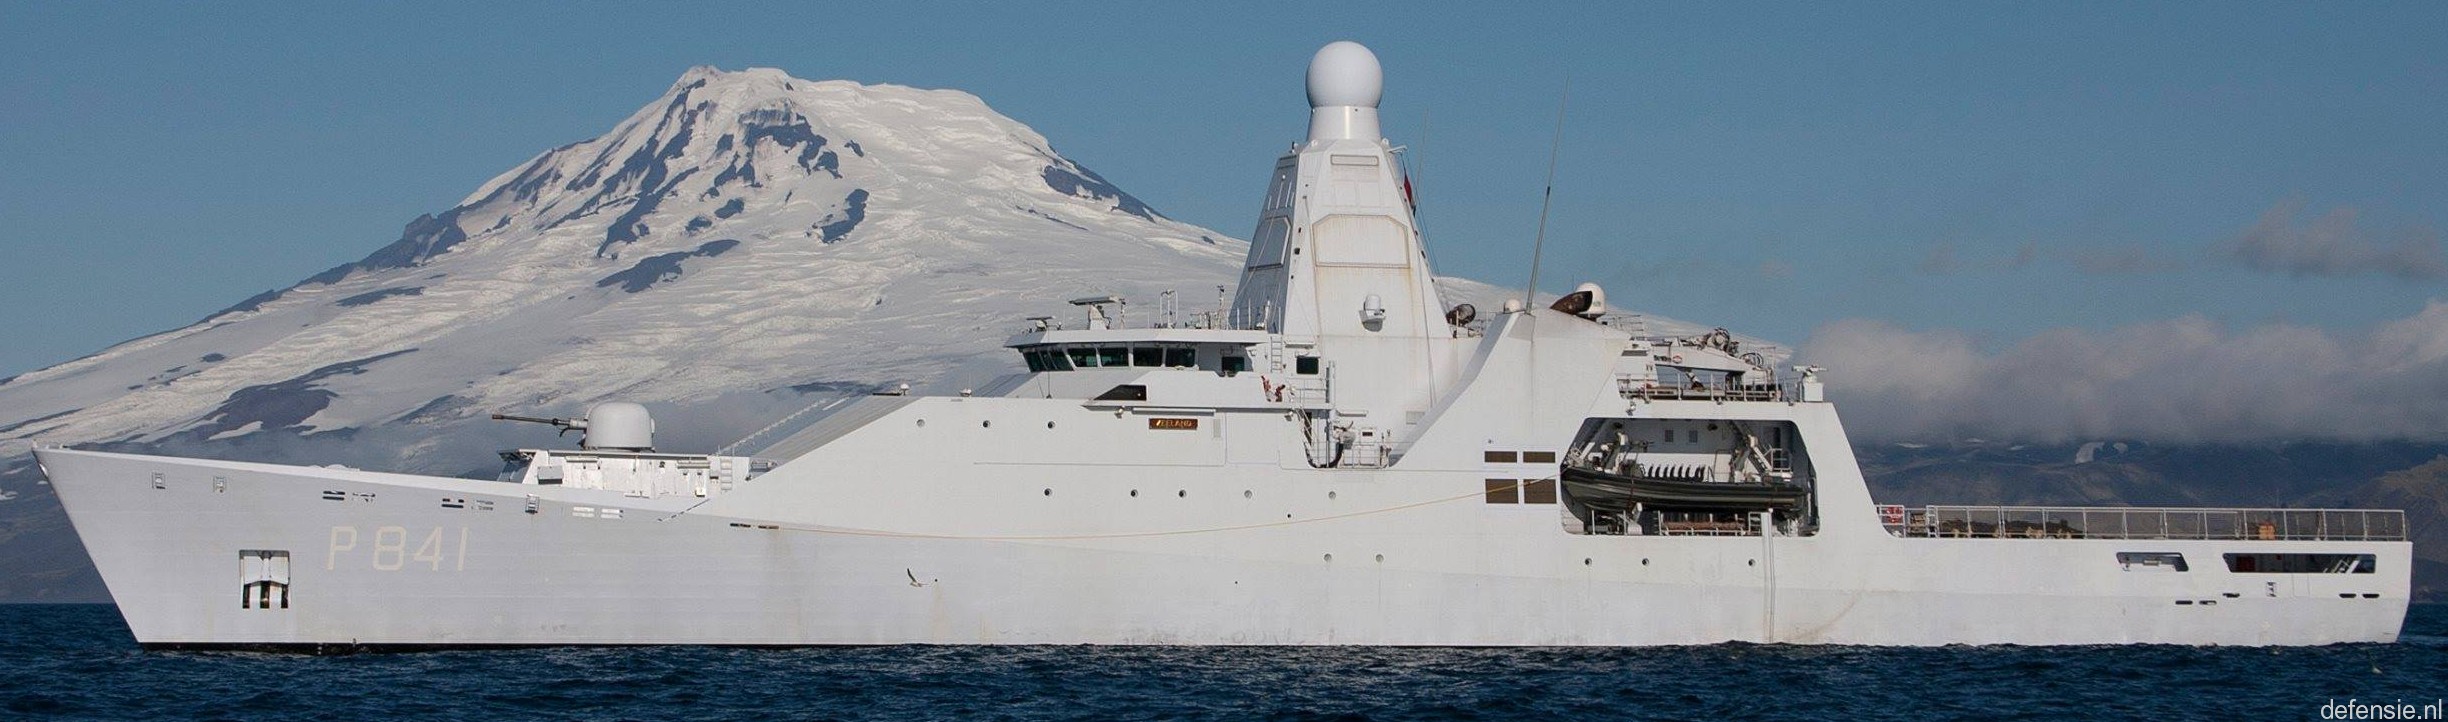 p-841 hnlms zeeland holland class offshore patrol vessel opv royal netherlands navy 11 zr. ms.